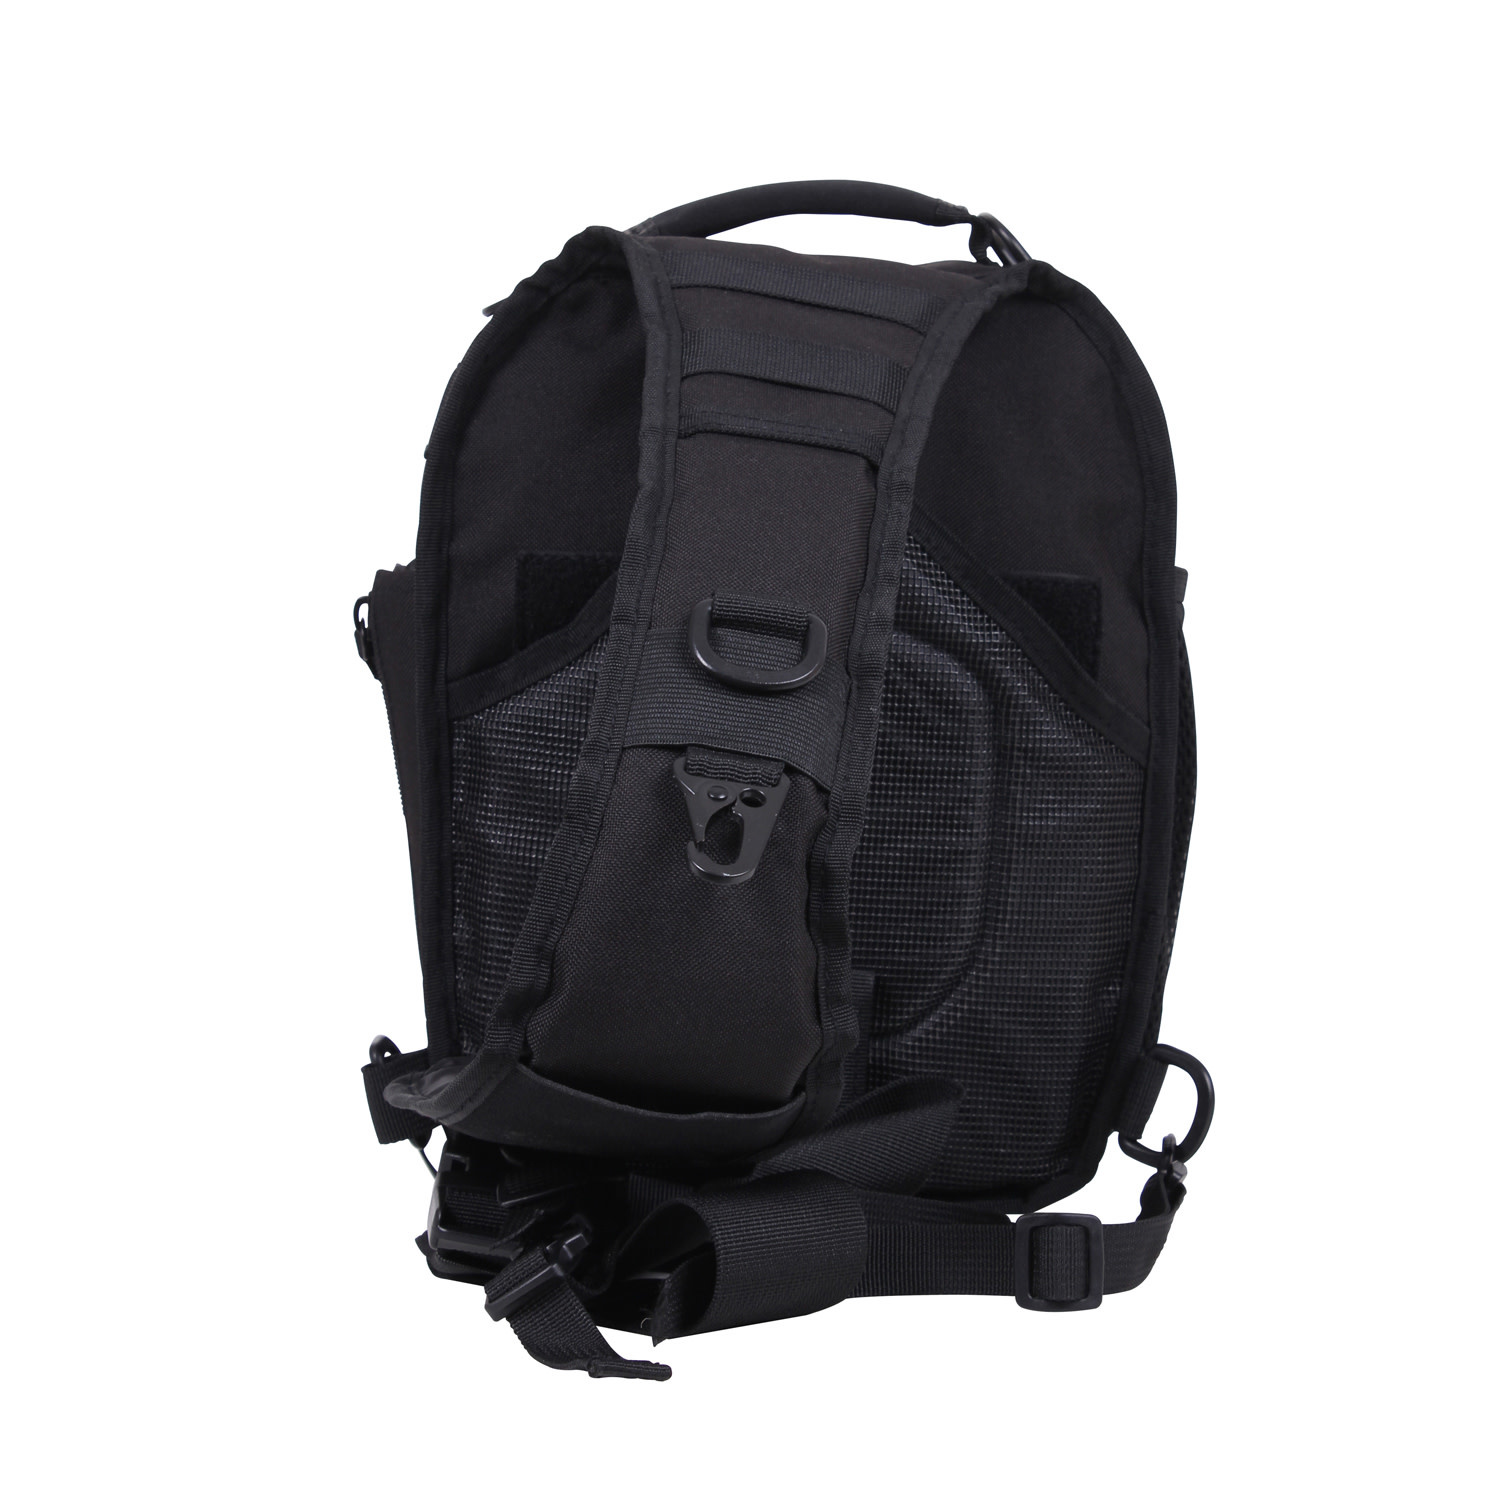 Rothco Compact Tactical Sling Shoulder Bag